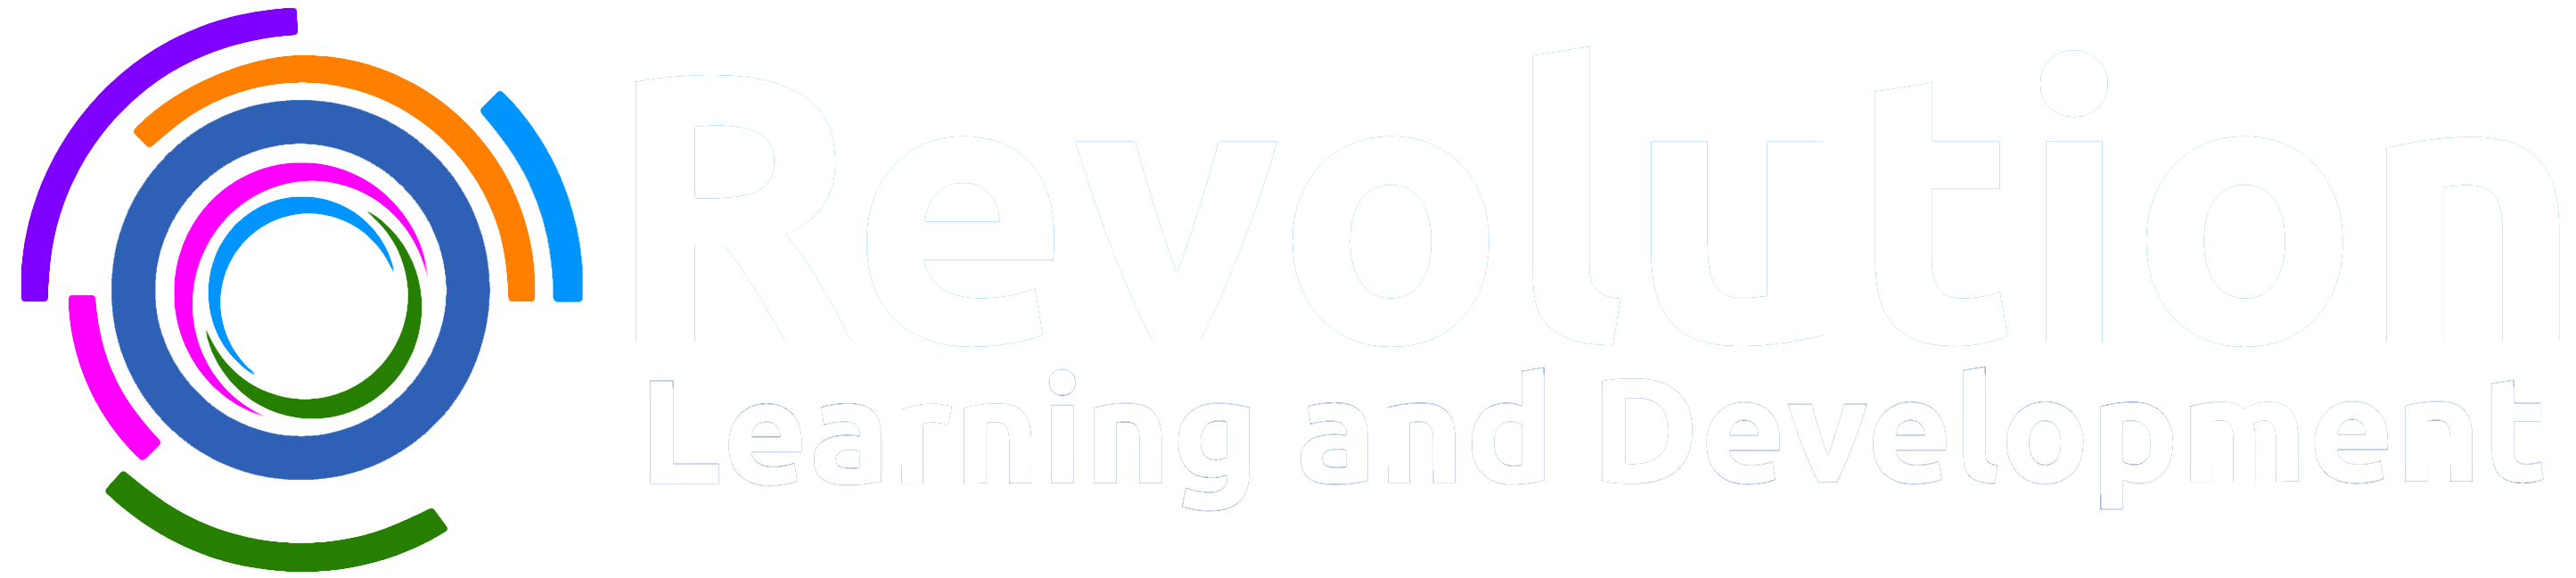 Revolution Learning and Development – Sweden